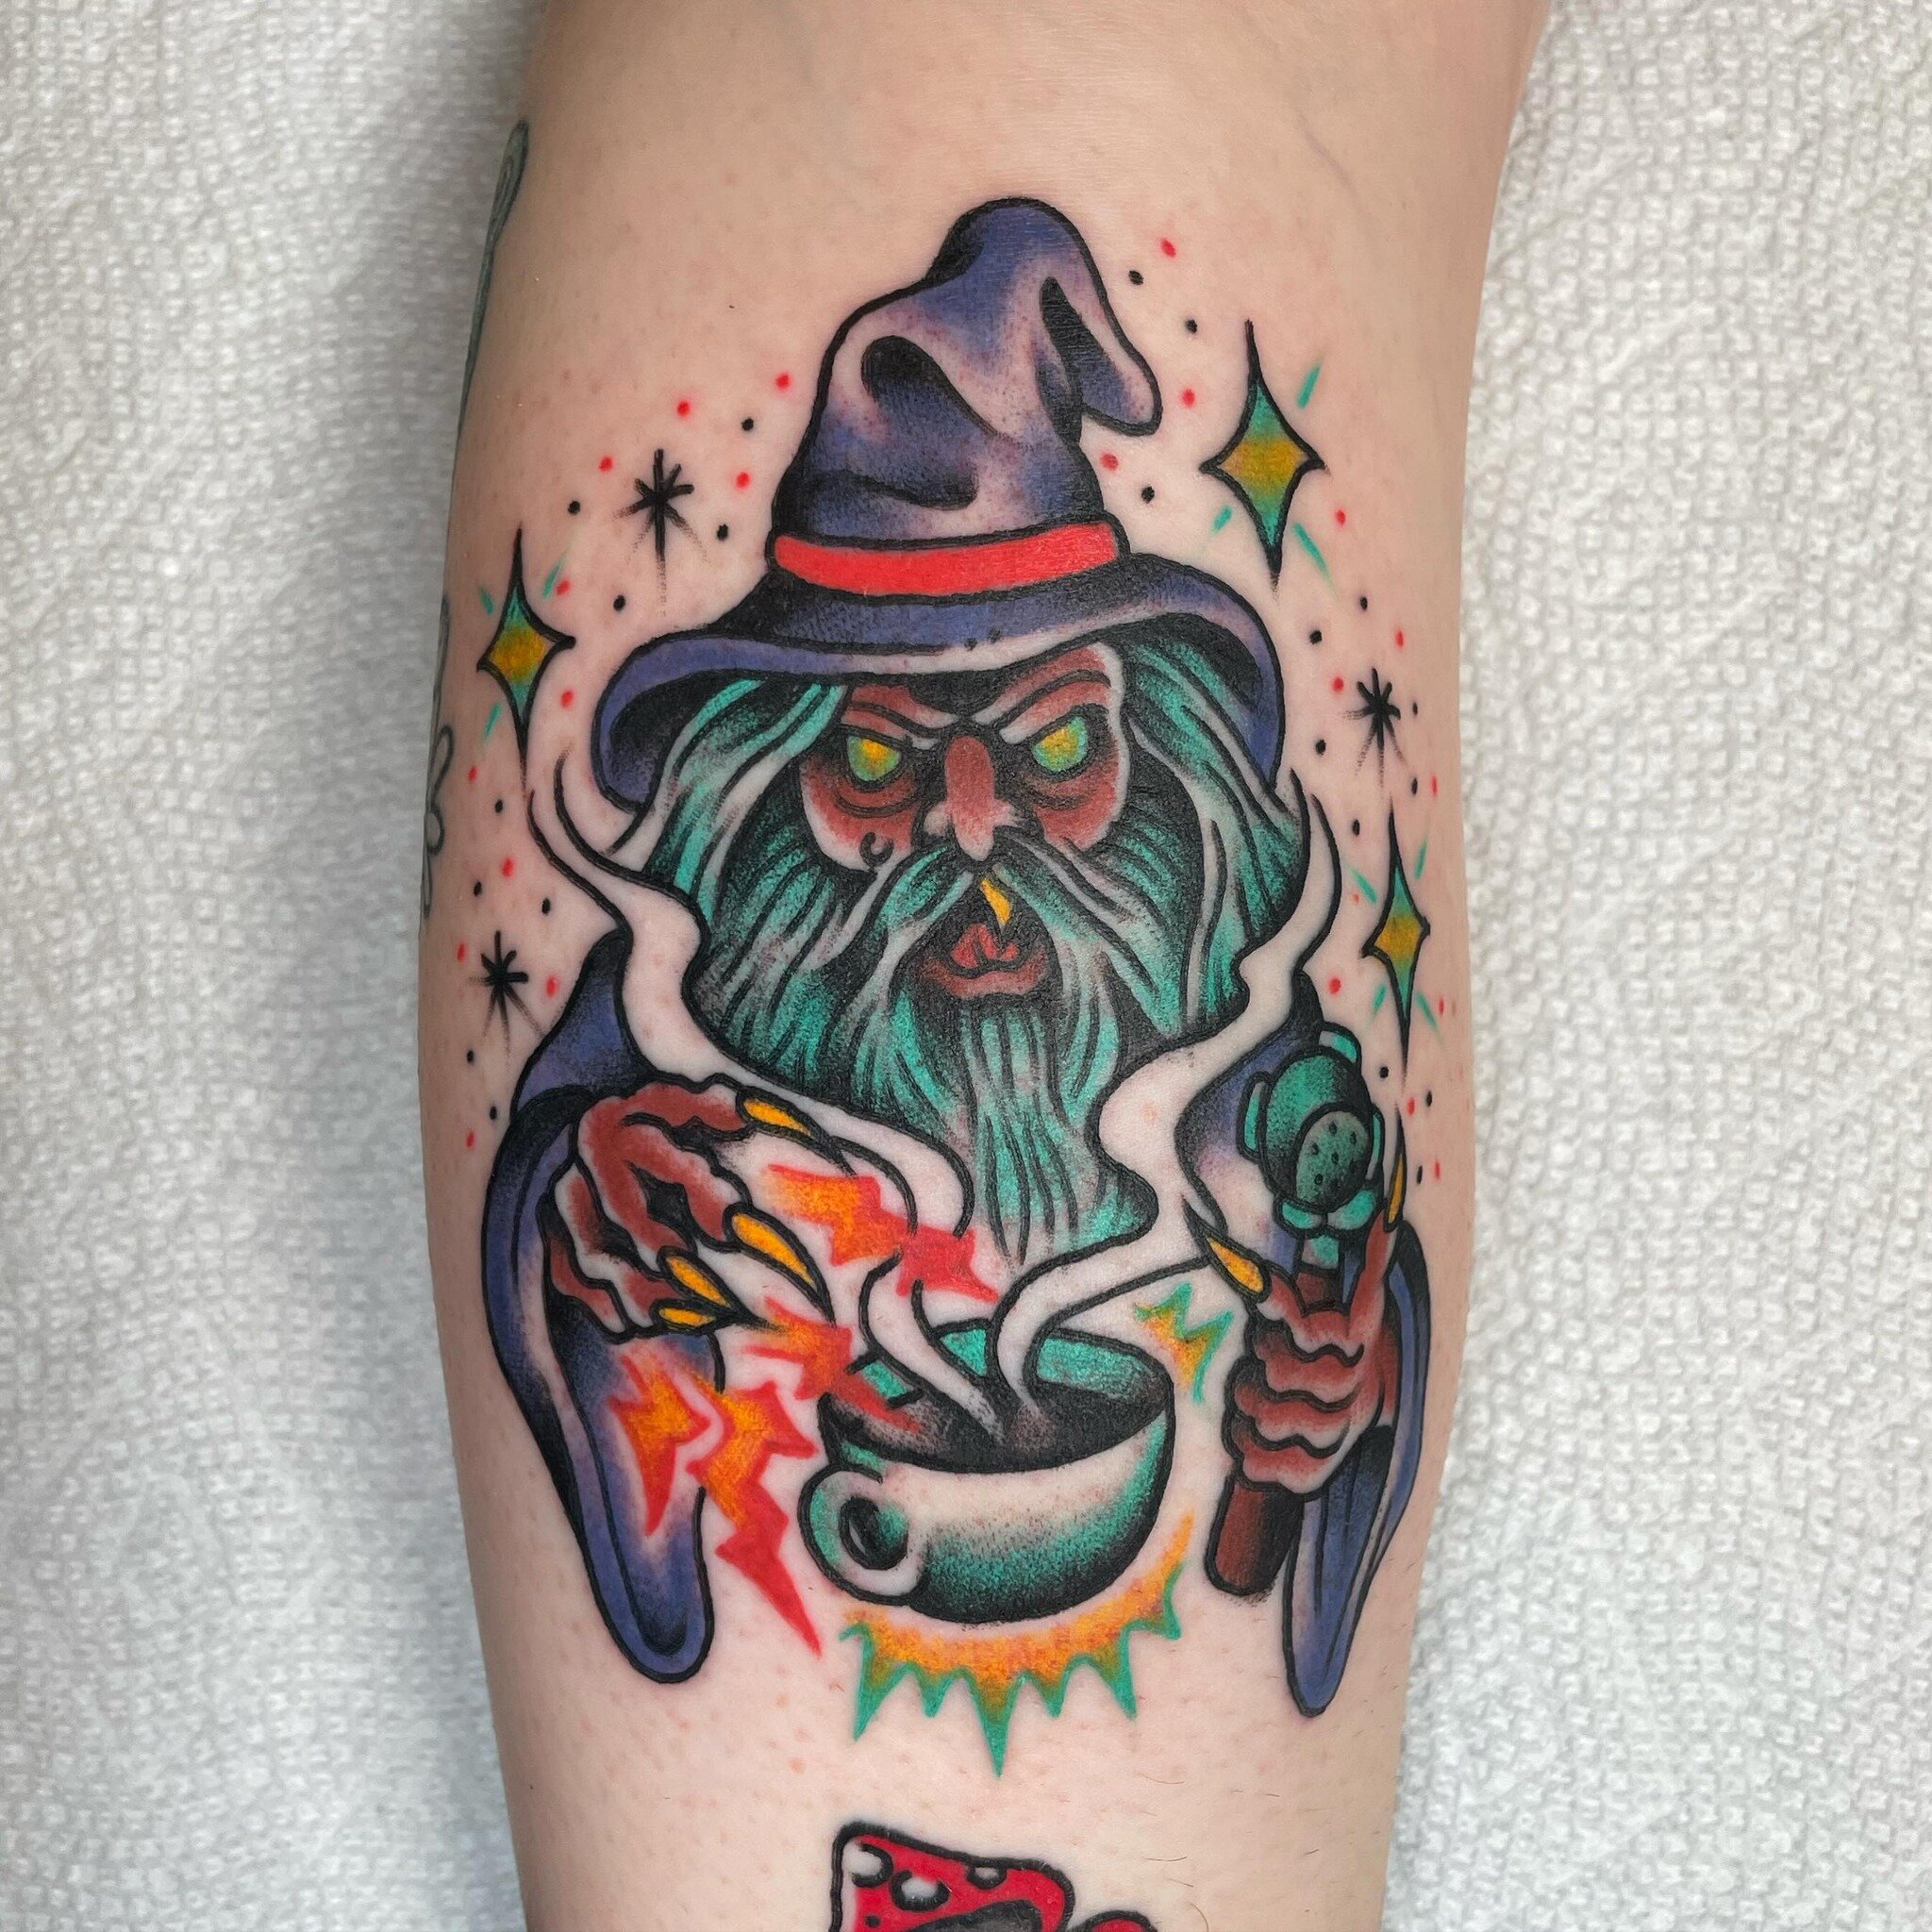 This was super fun! Love tattooing wizards doing wizard things. Thanks again Lauren! 
.
.
.
#wizardtattoo #coffeetattoo #tattoo #tattoos #okc #oklahomacity #oklahoma #oklahomacitytattoo #oklahomacitytattooartist  #oklahomatattooartist #oklahomatattoo